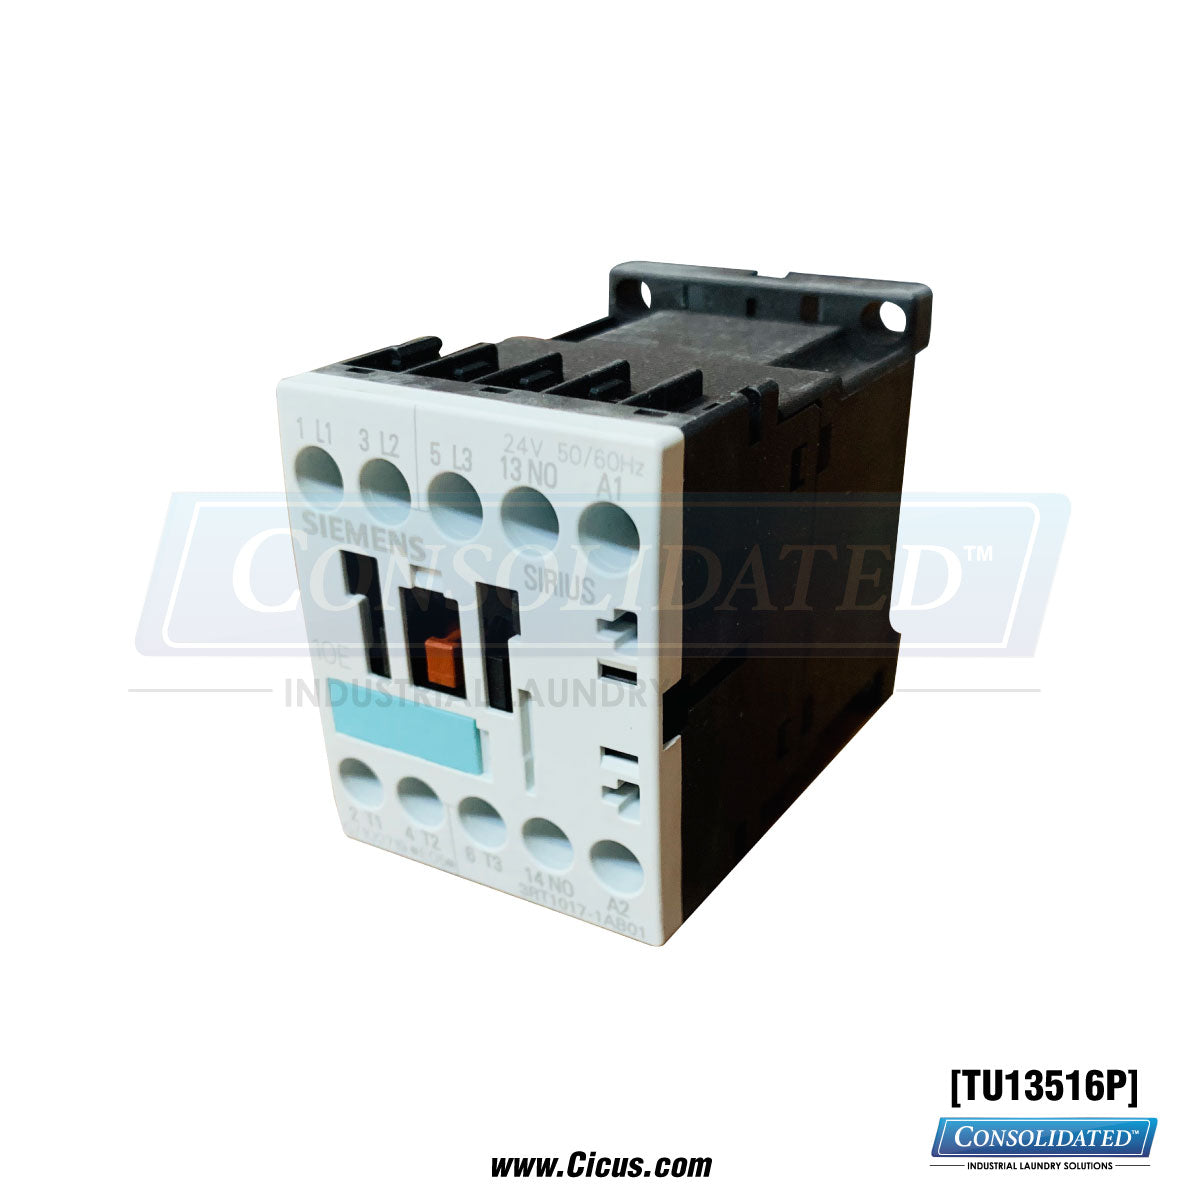 Alliance Laundry Systems Dryer Contactor 24VAC IEC 12A w/AUX [TU13516P]